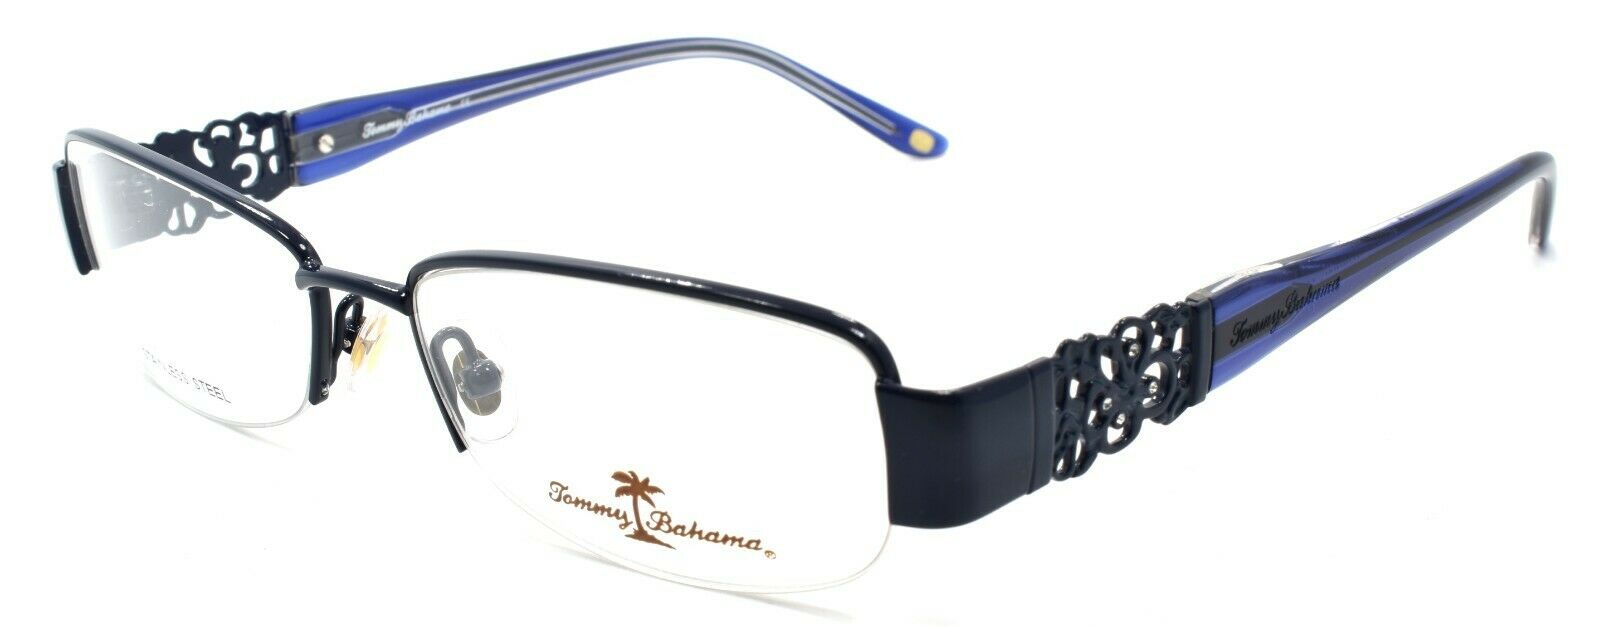 1-Tommy Bahama TB5026 414 Women's Eyeglasses Frames Half-rim 52-16-140 Navy Blue-788678023438-IKSpecs